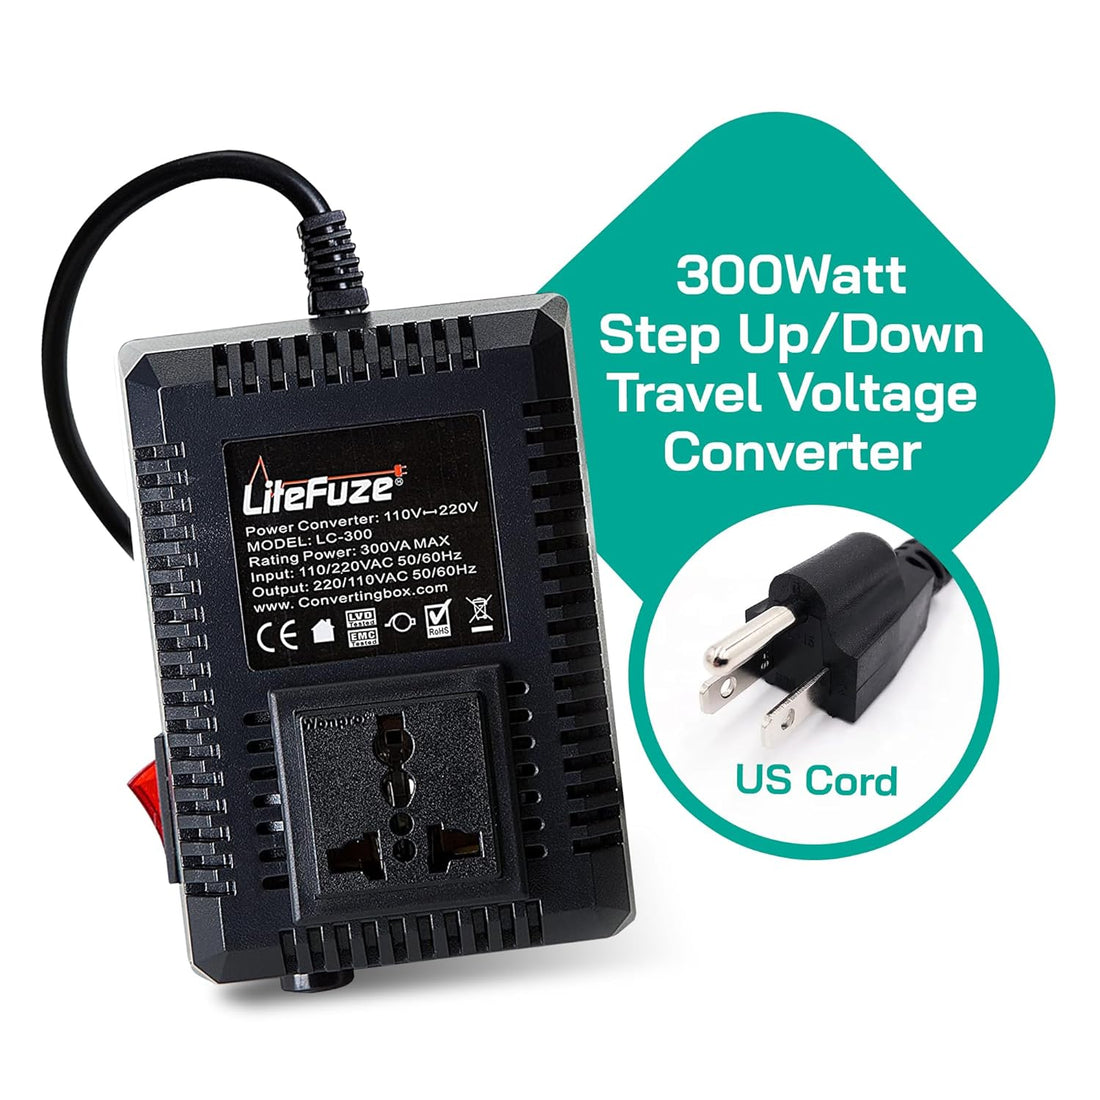 LiteFuze LC-300US 300Watt Step Up/Down Travel Voltage Converter, US Cord